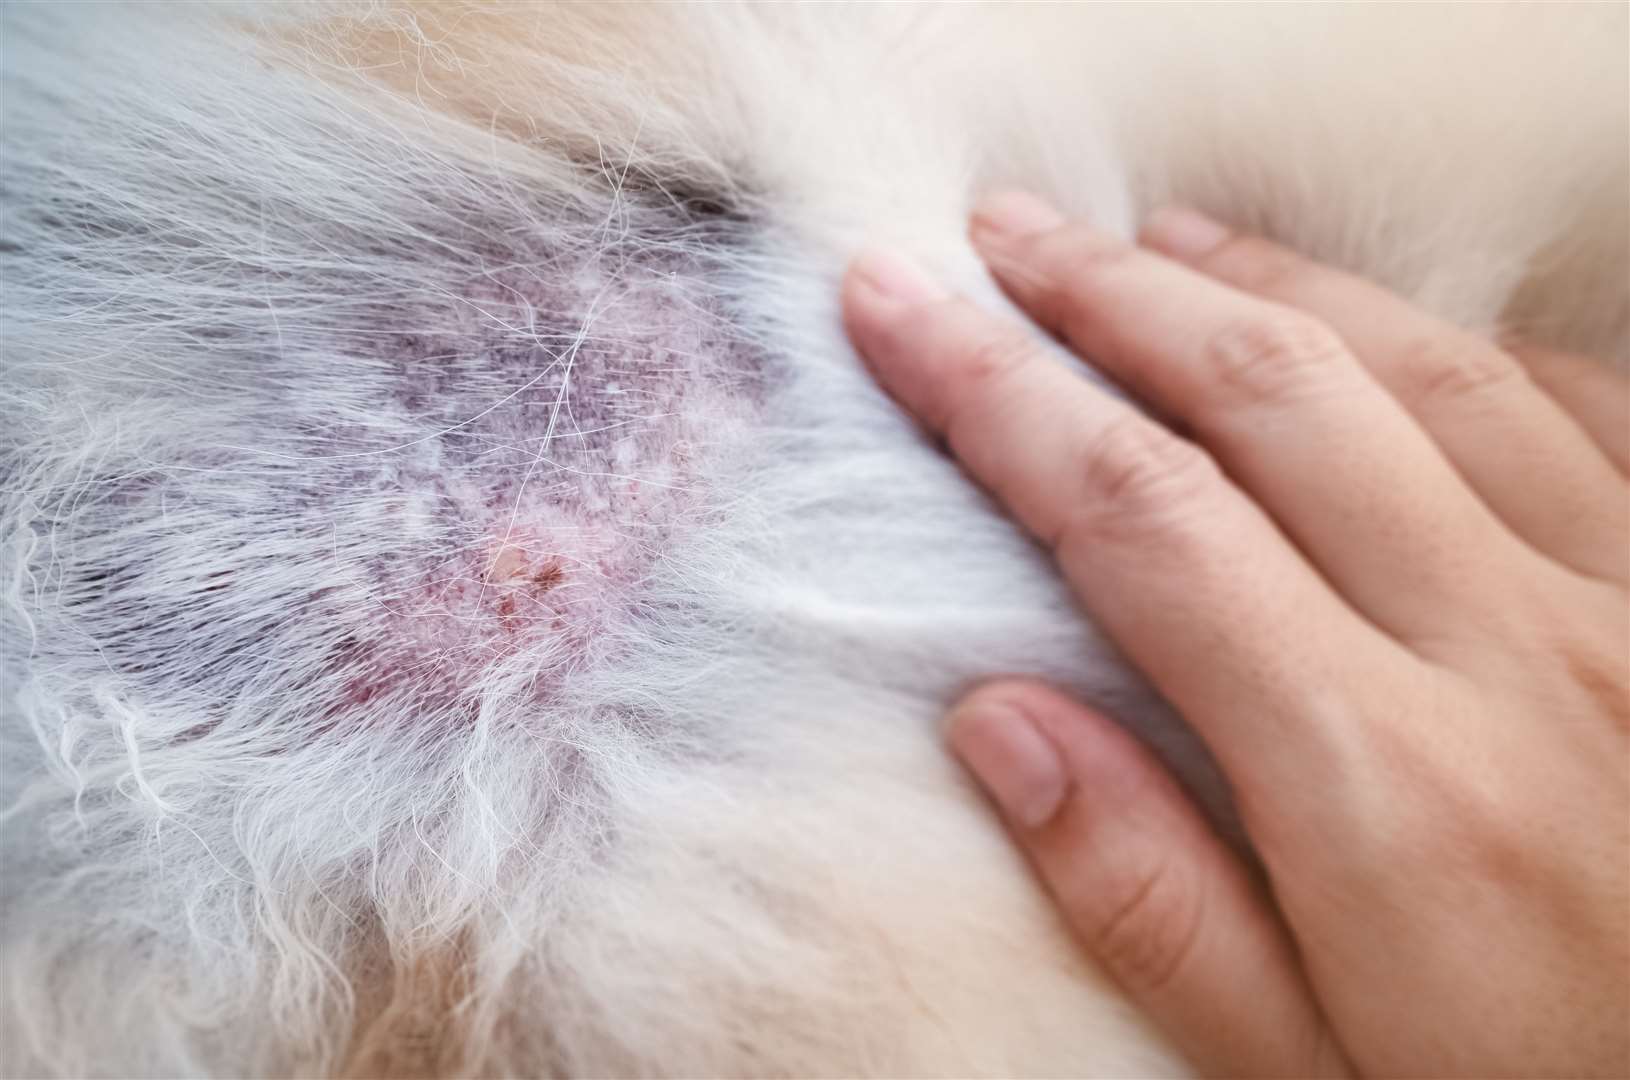 Dermatitis on a dog. Picture: istock/Watcharin panyawutso